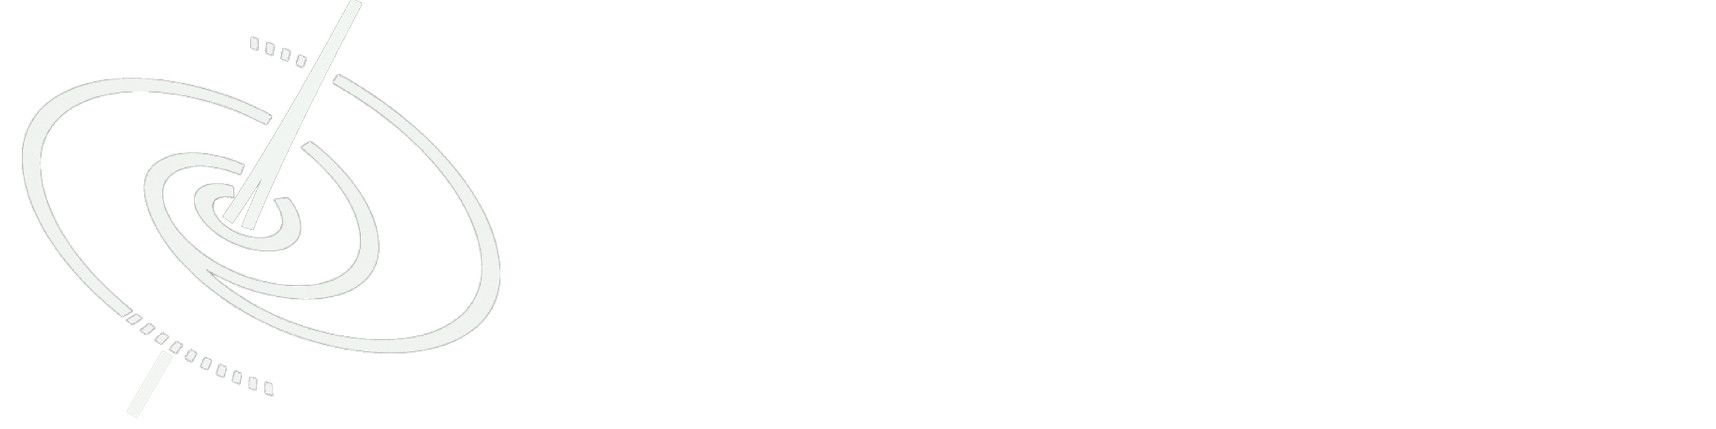 HEX-P: The High Energy X-ray Probe